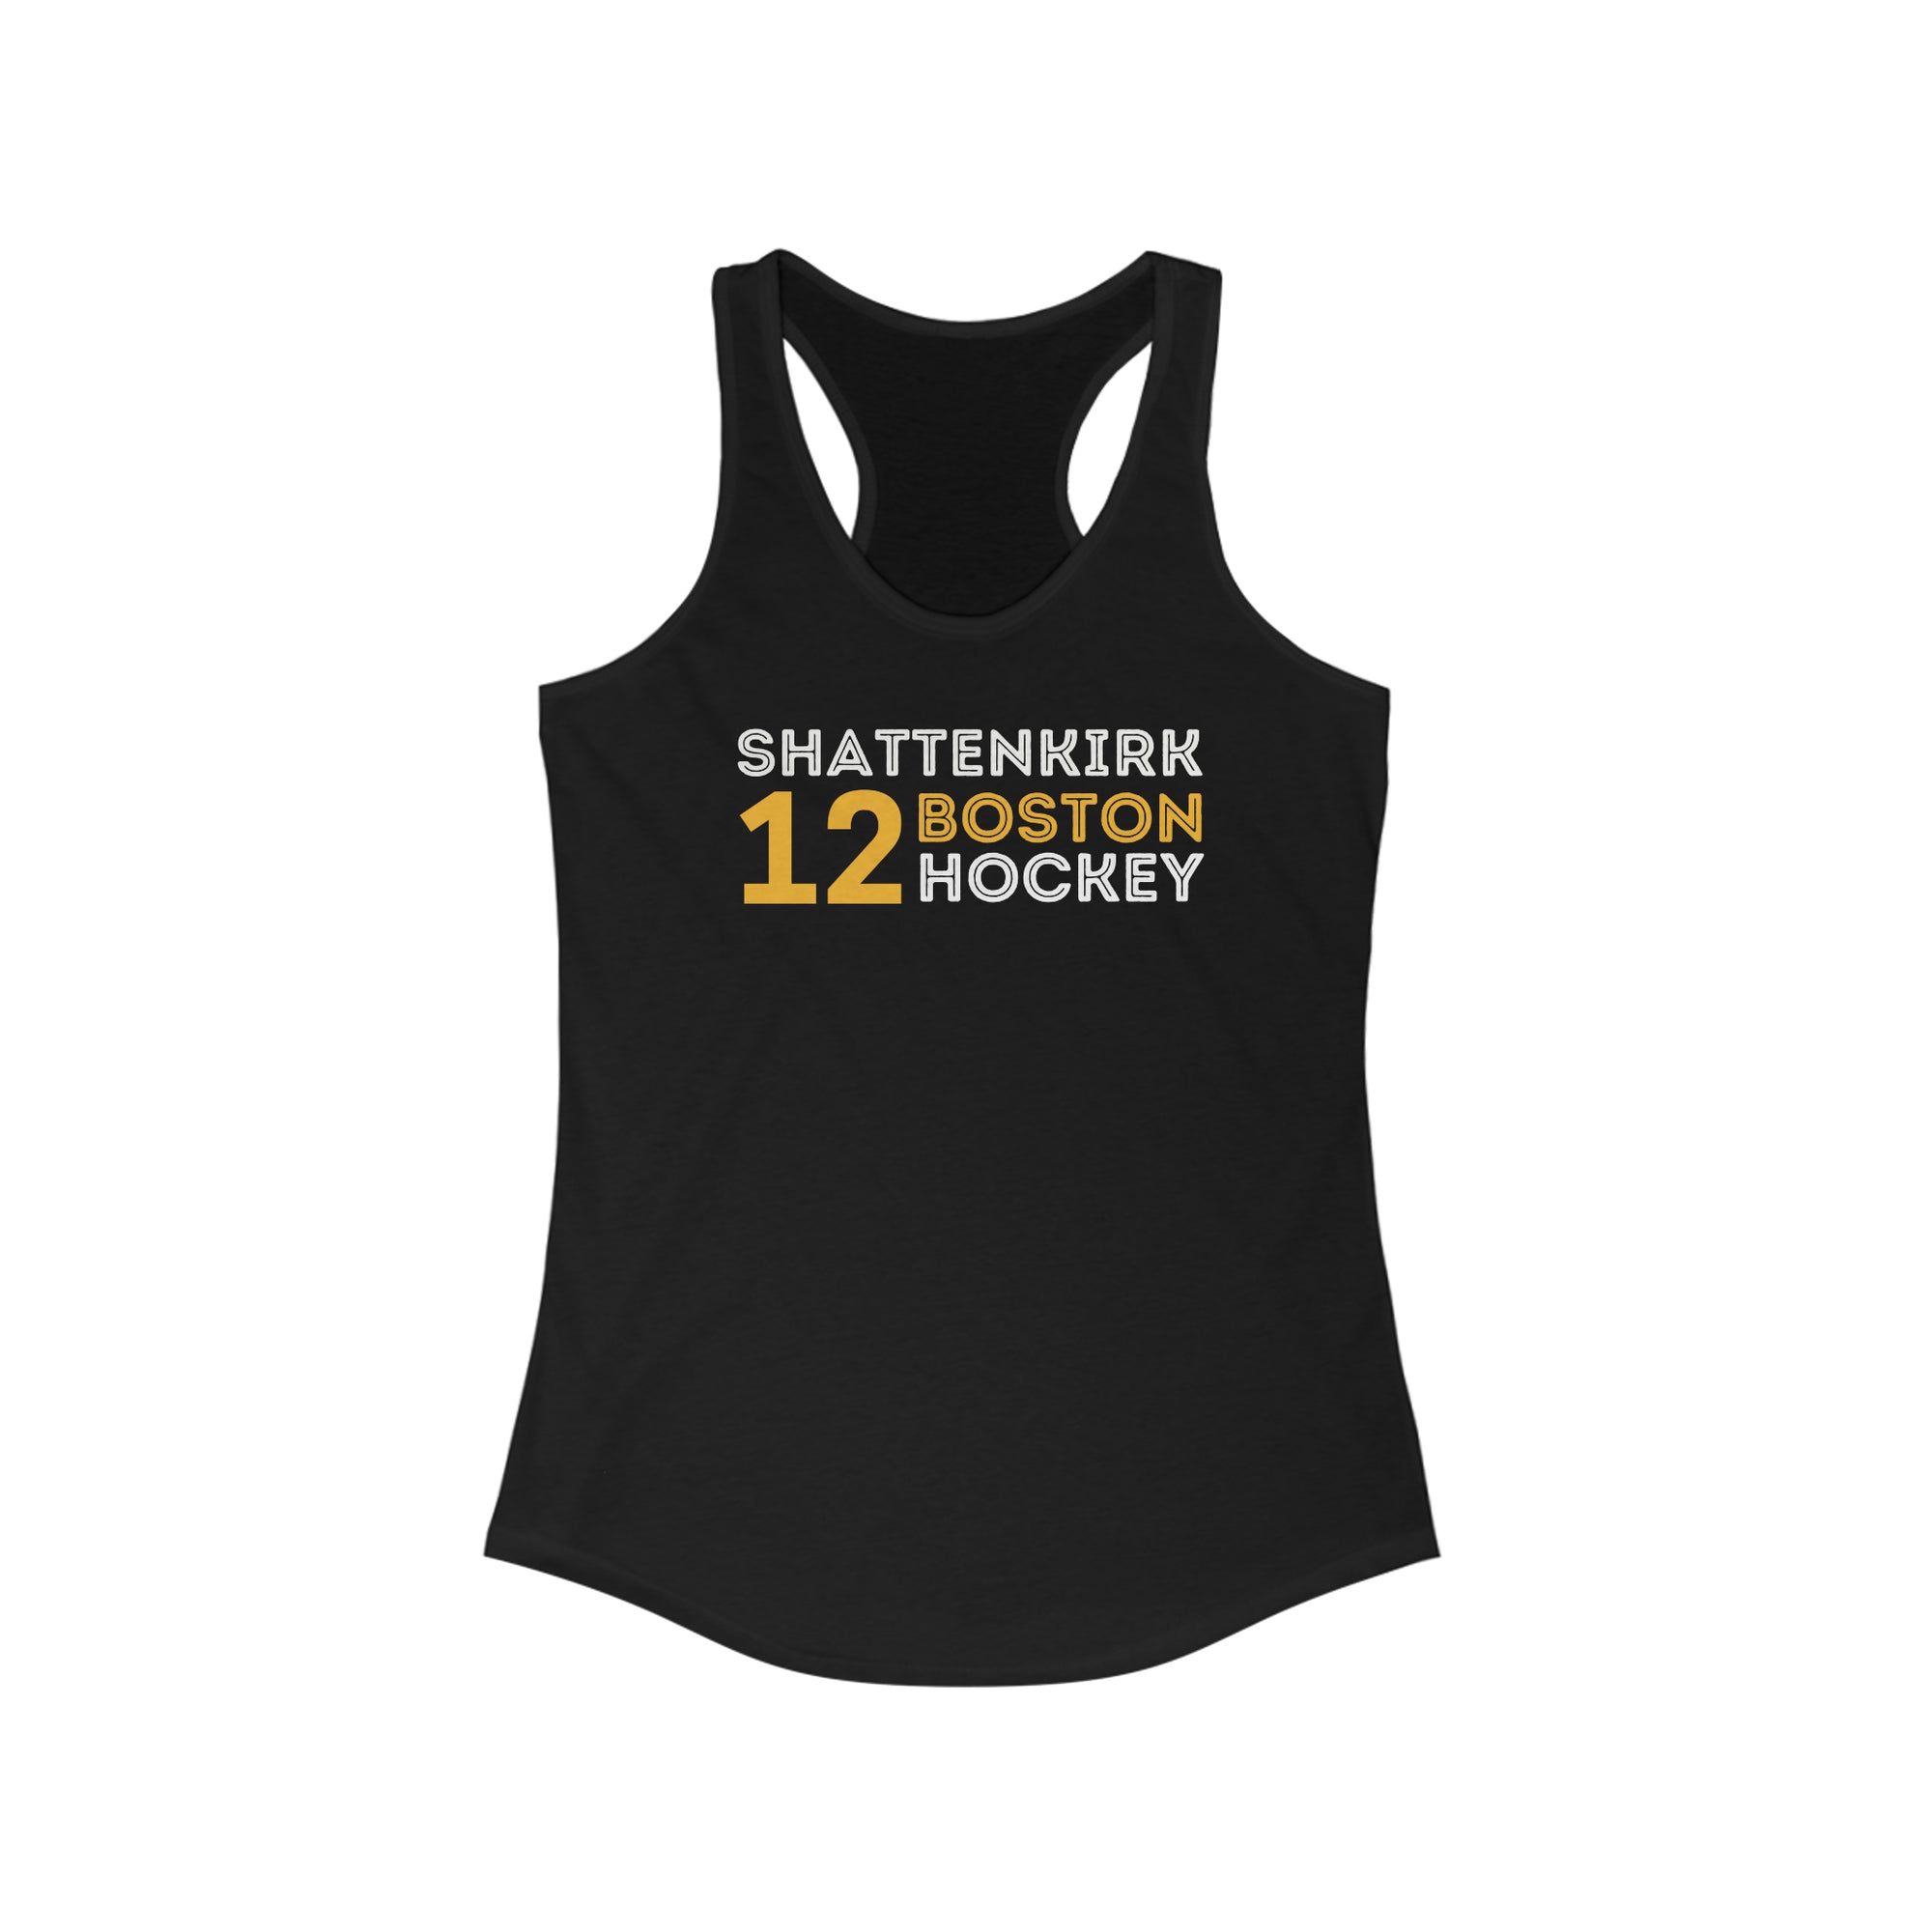 Shattenkirk 12 Boston Hockey Grafitti Wall Design Women's Ideal Racerback Tank Top